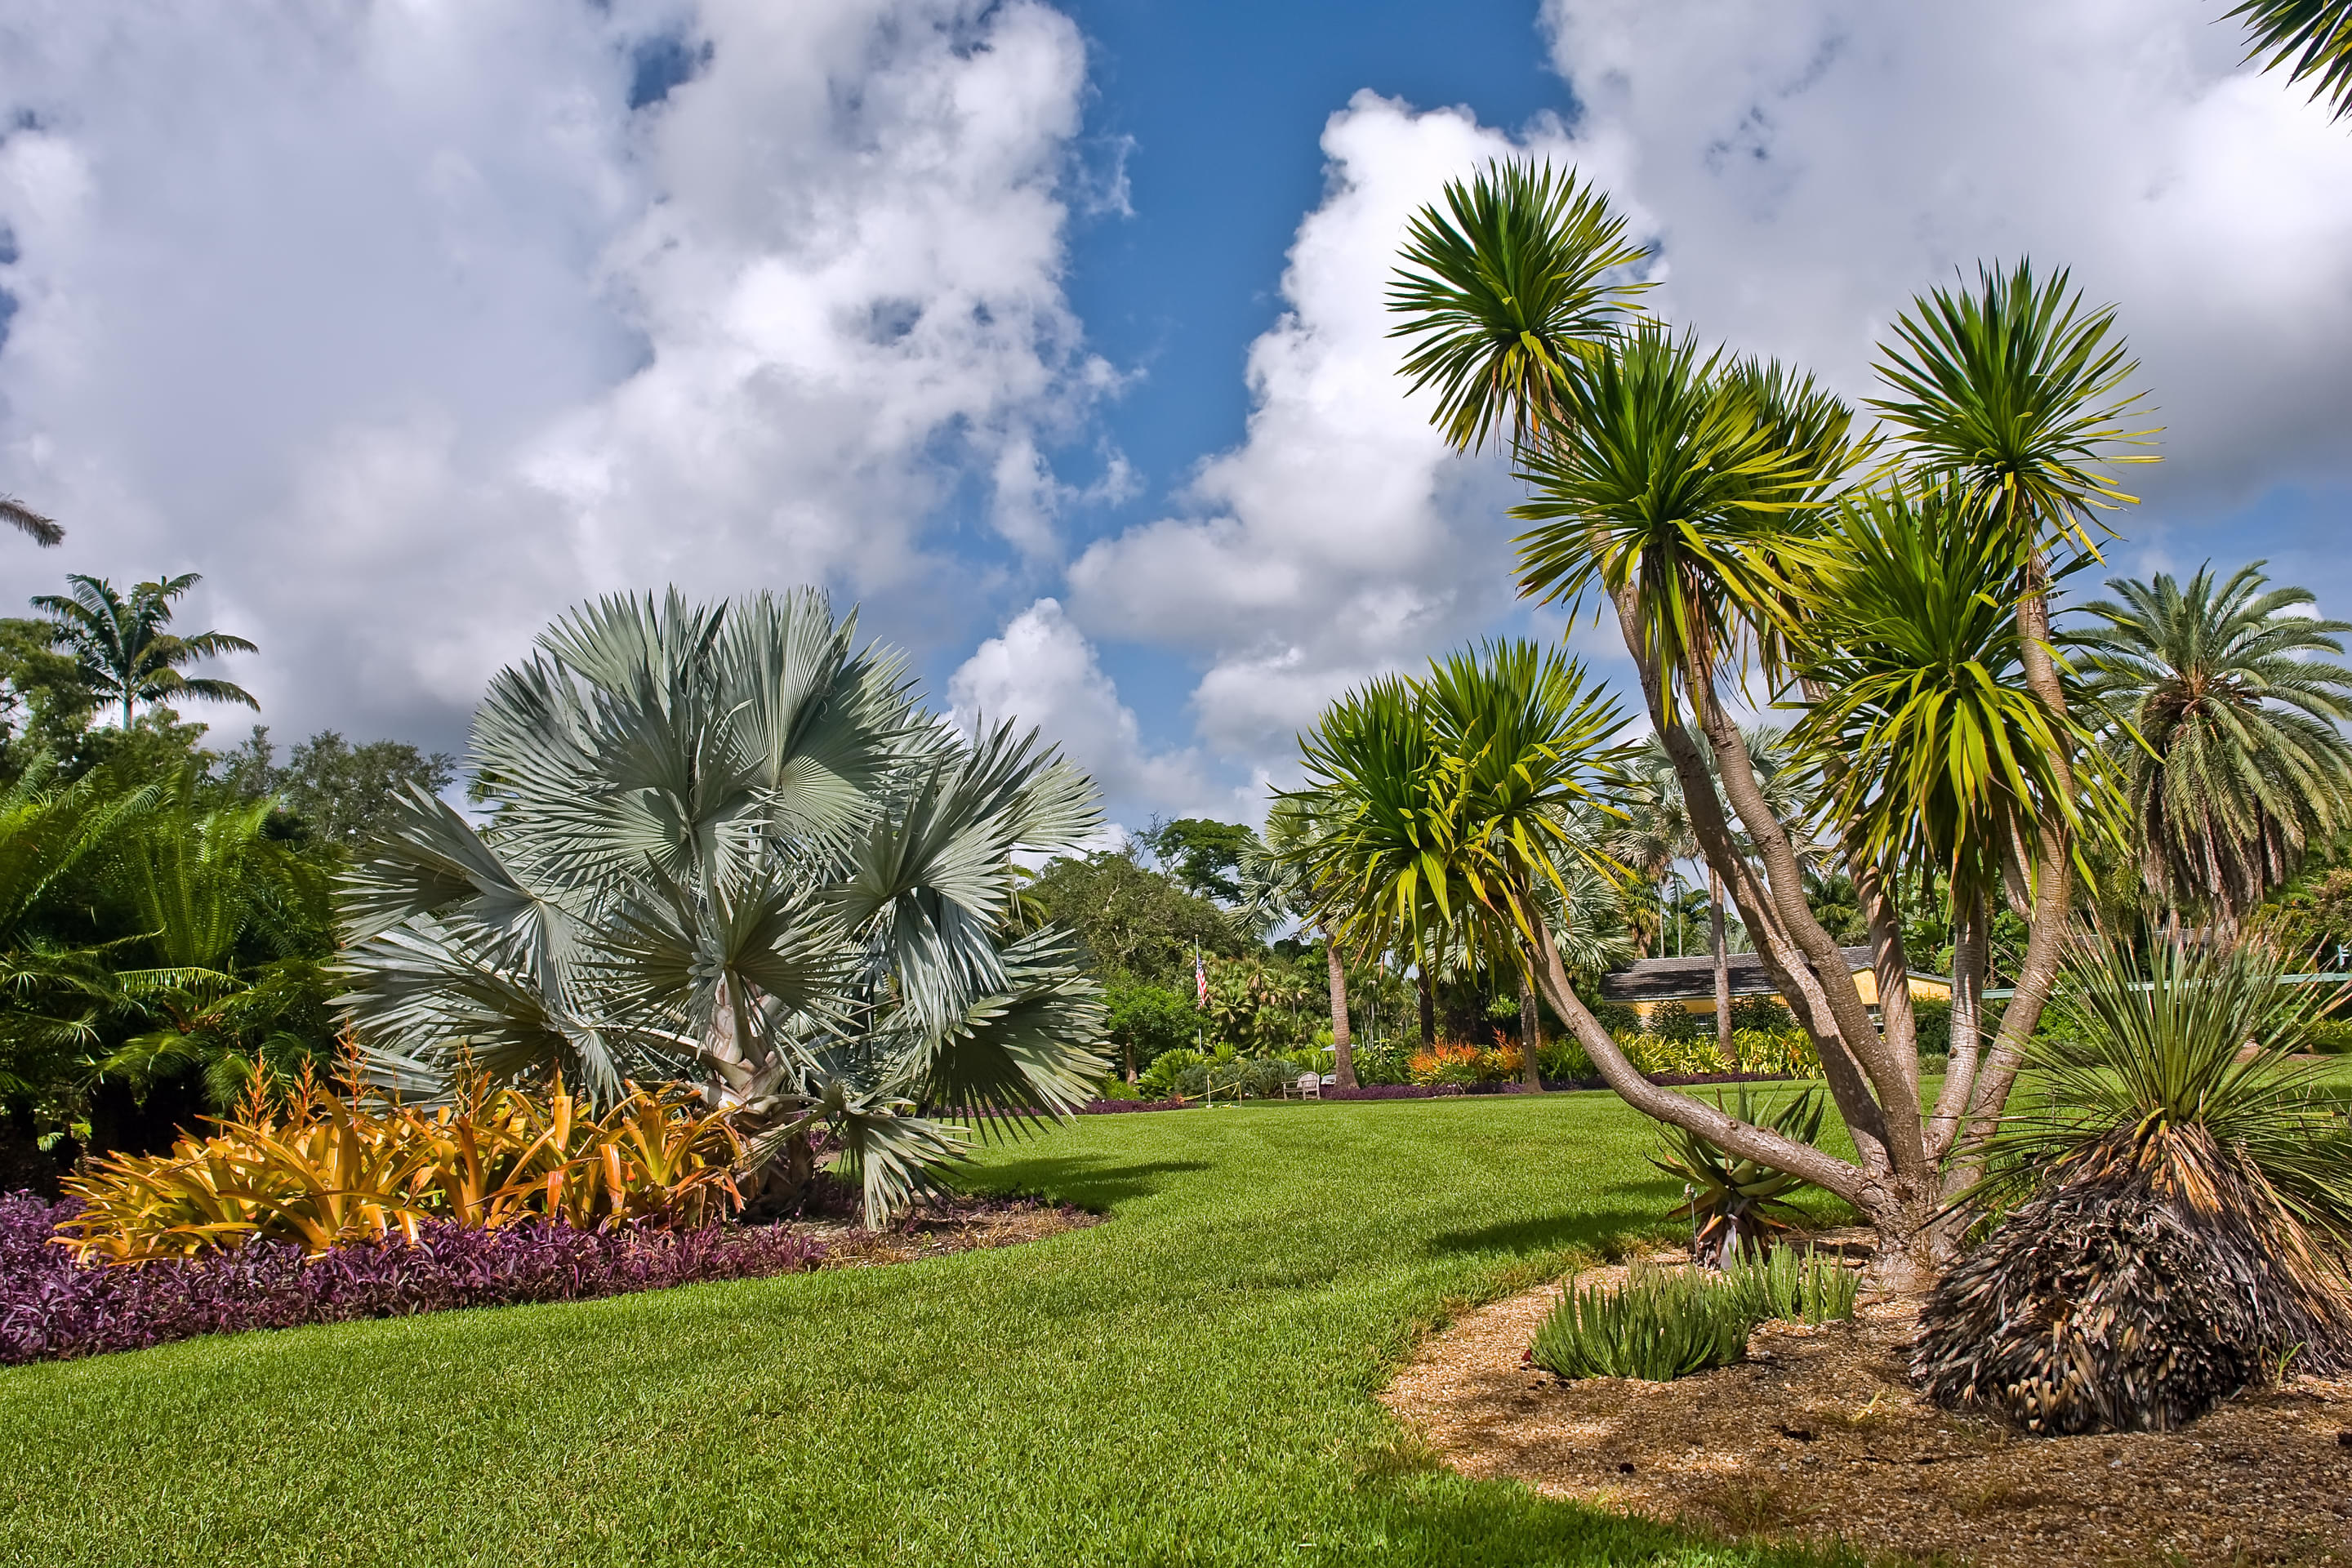 Fairchild Tropical Botanic Garden Overview